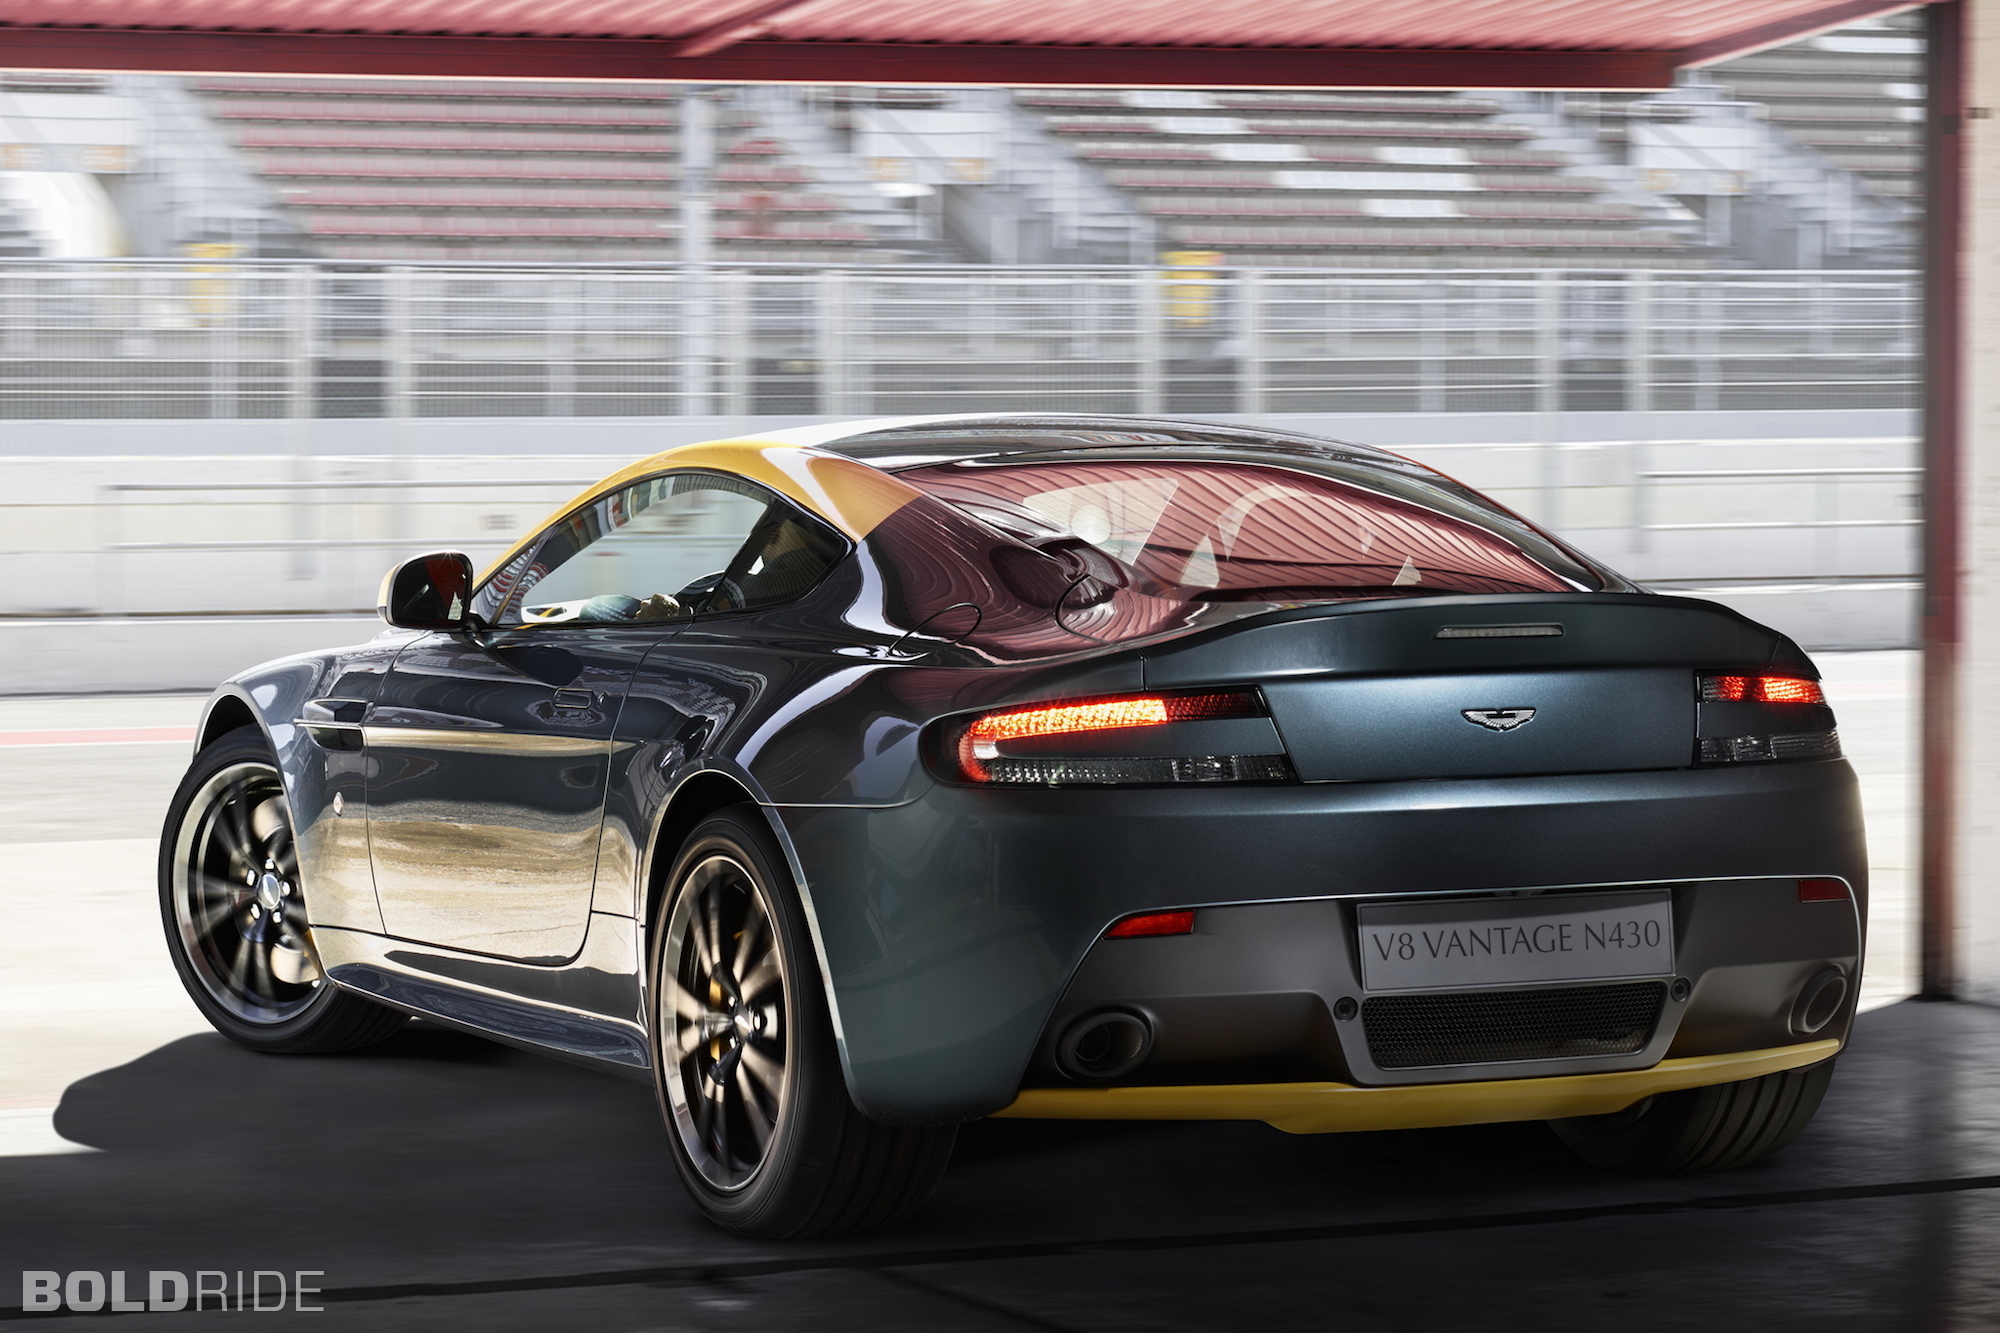 2015 Aston Martin V8 Vantage N430 Backgrounds, Compatible - PC, Mobile, Gadgets| 2000x1333 px